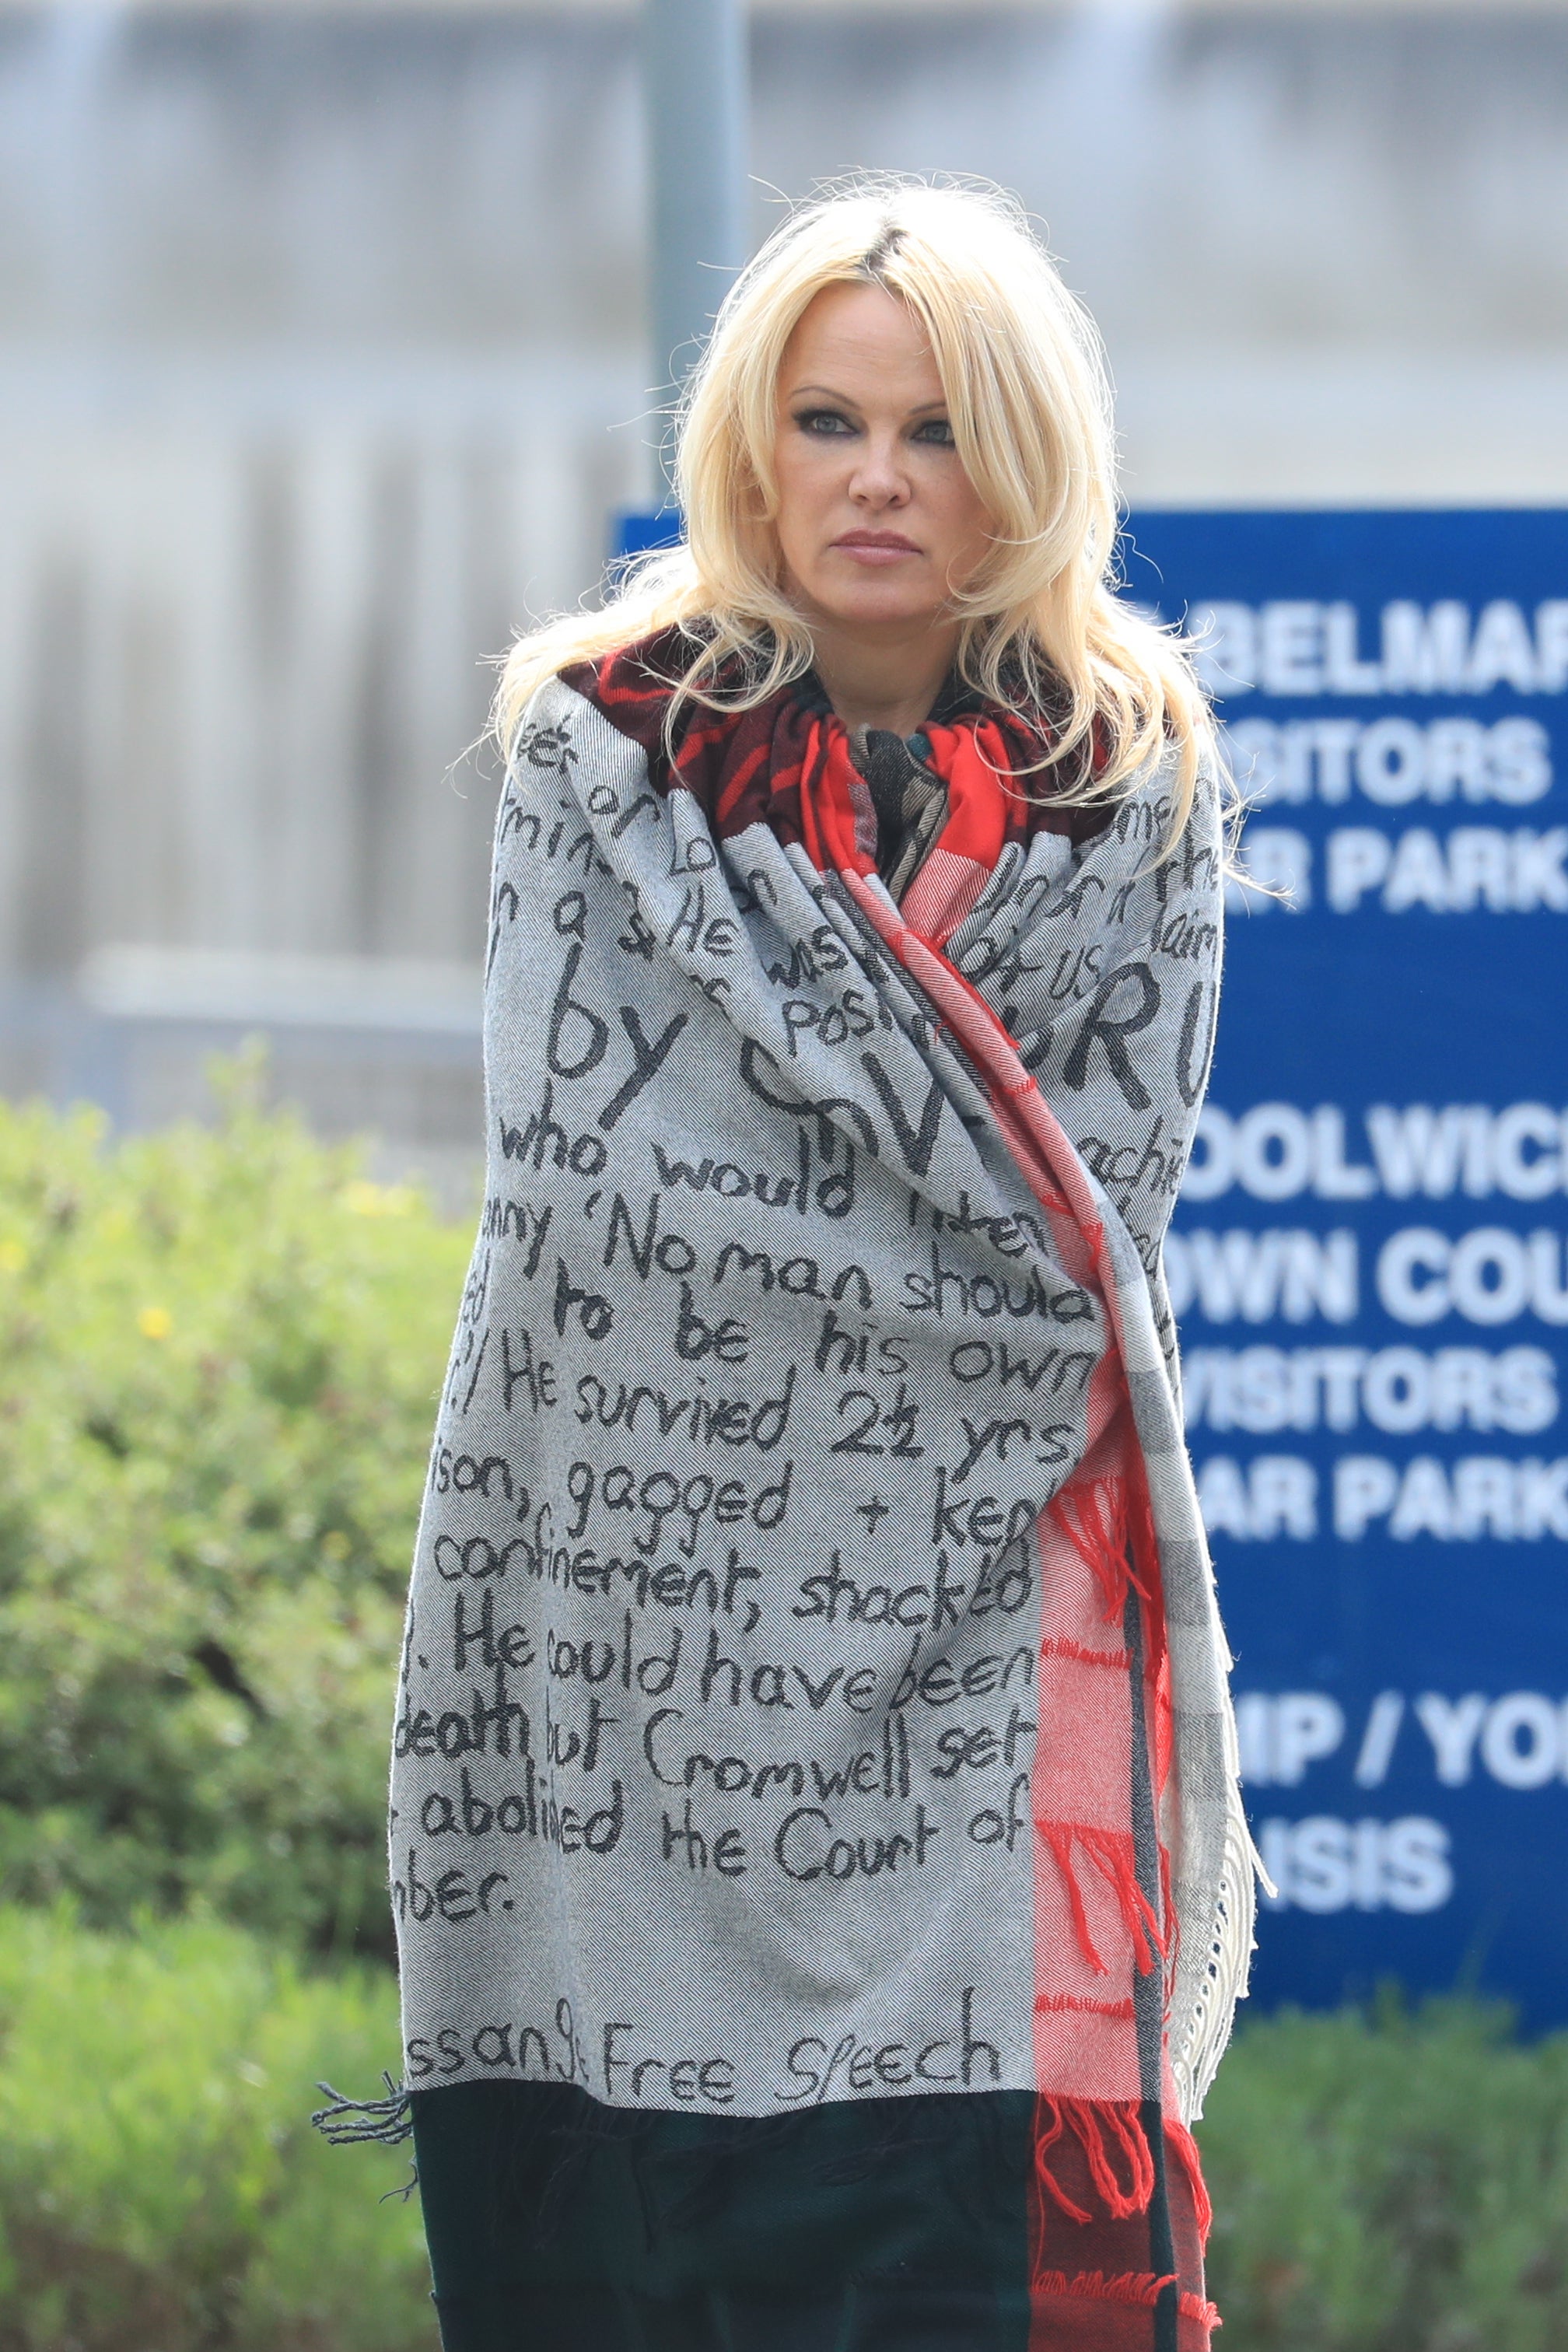 Actress Pamela Anderson leaving Belmarsh prison after visiting Julian Assange (PA)